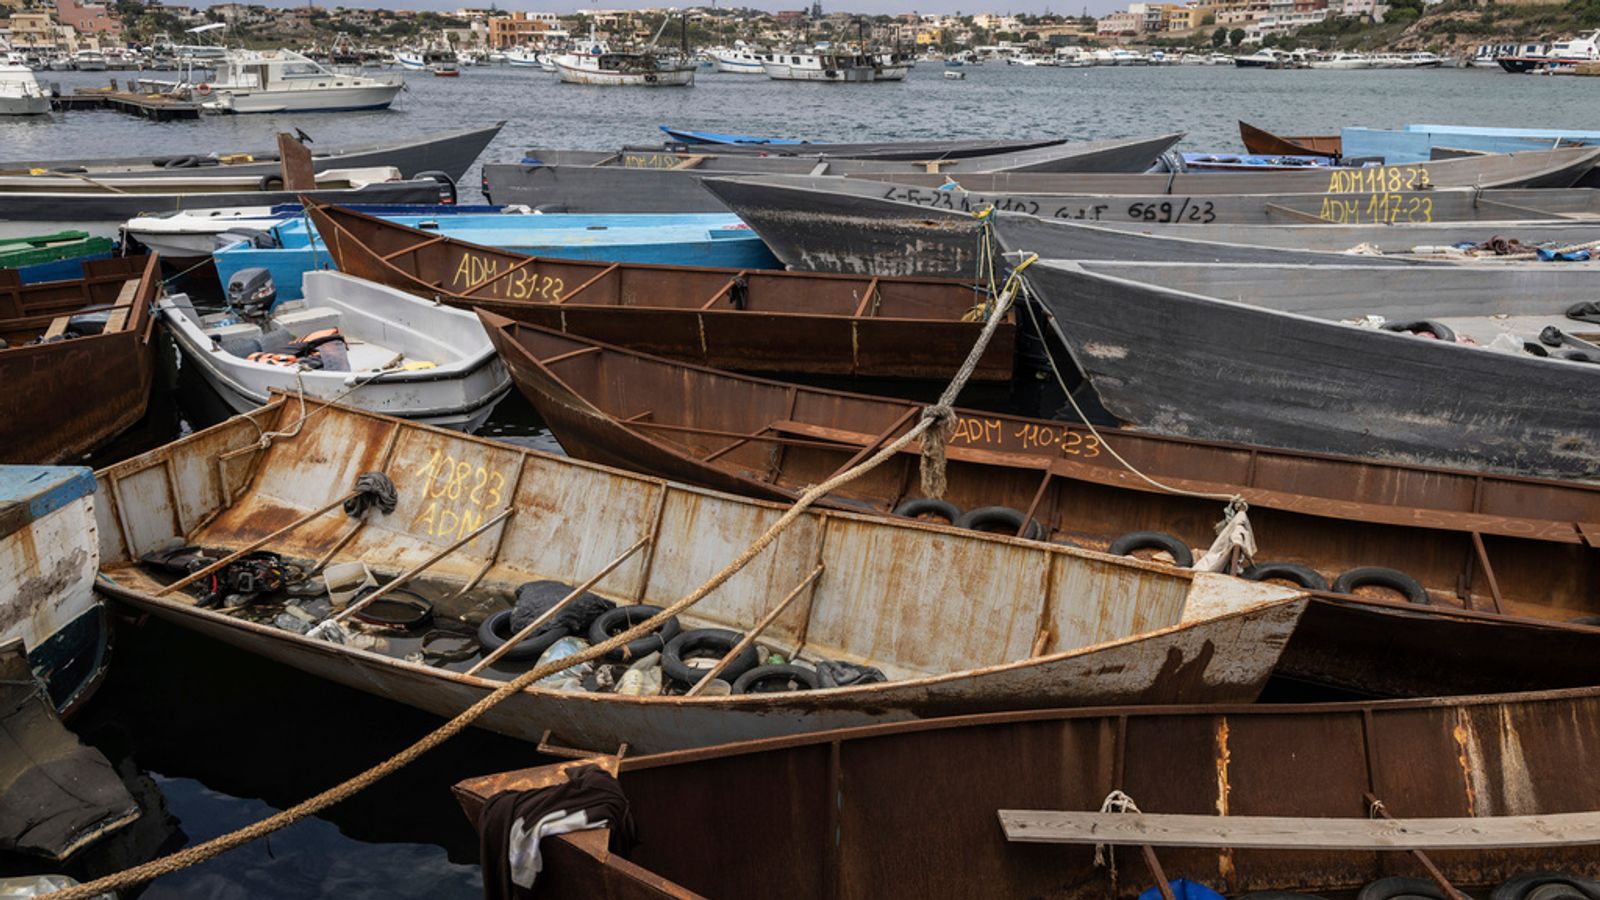 Lampedusa: 'Dozens' of migrants killed in shipwreck off Italian island